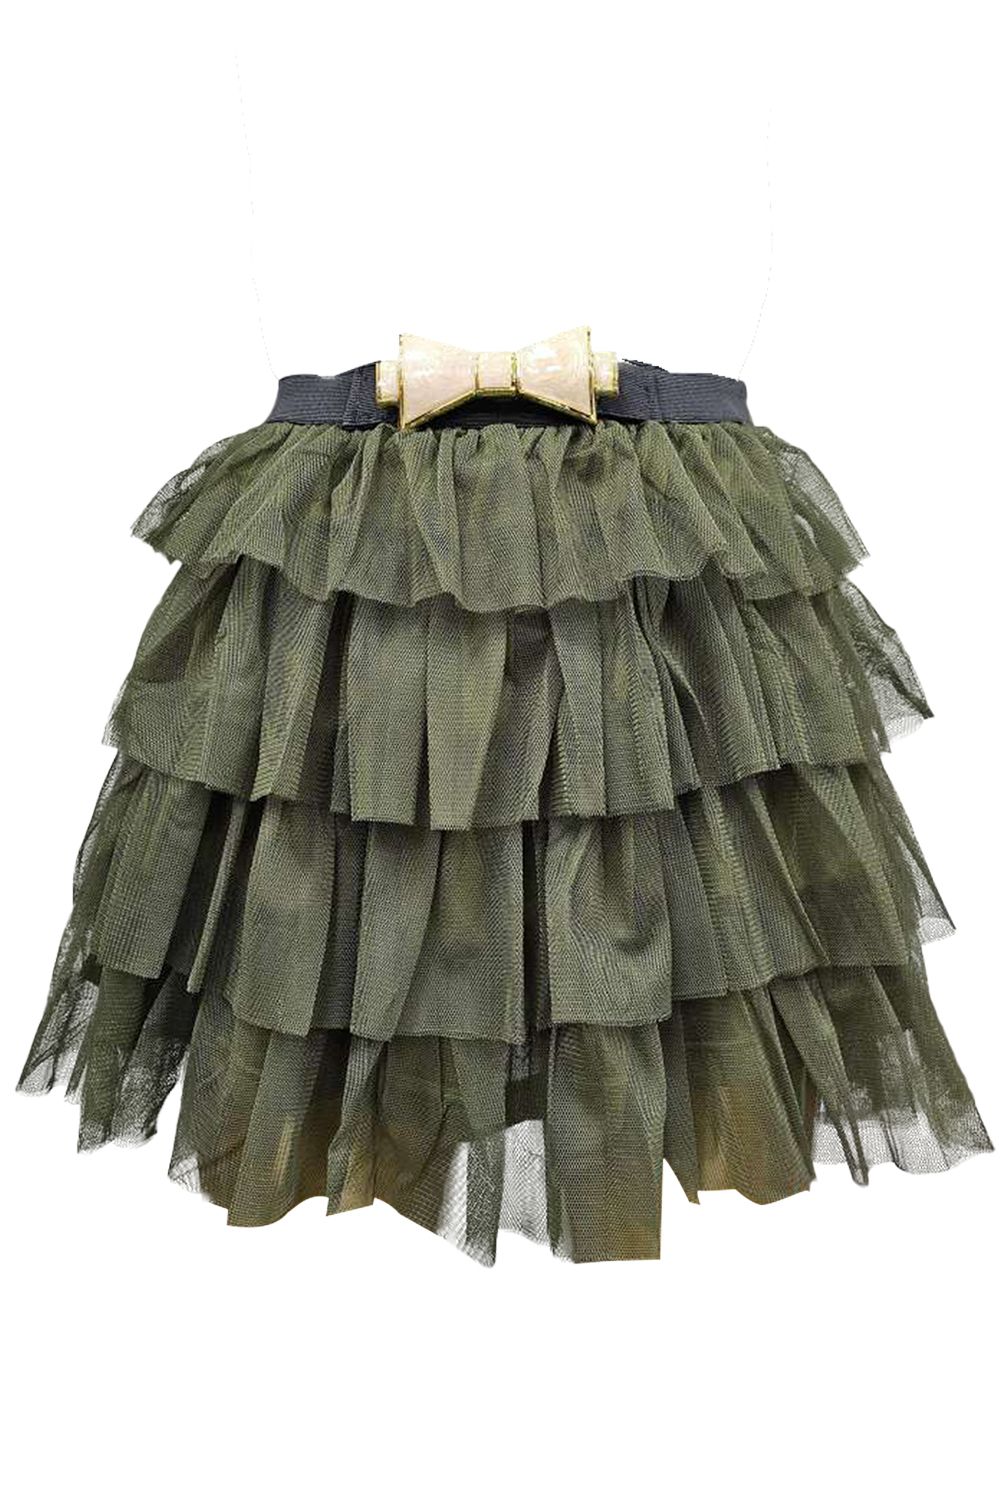 Crazy Chick Adult 2 Layers Khaki Green Bow Belt Mesh Tiered Tutu Skirt (Adult)